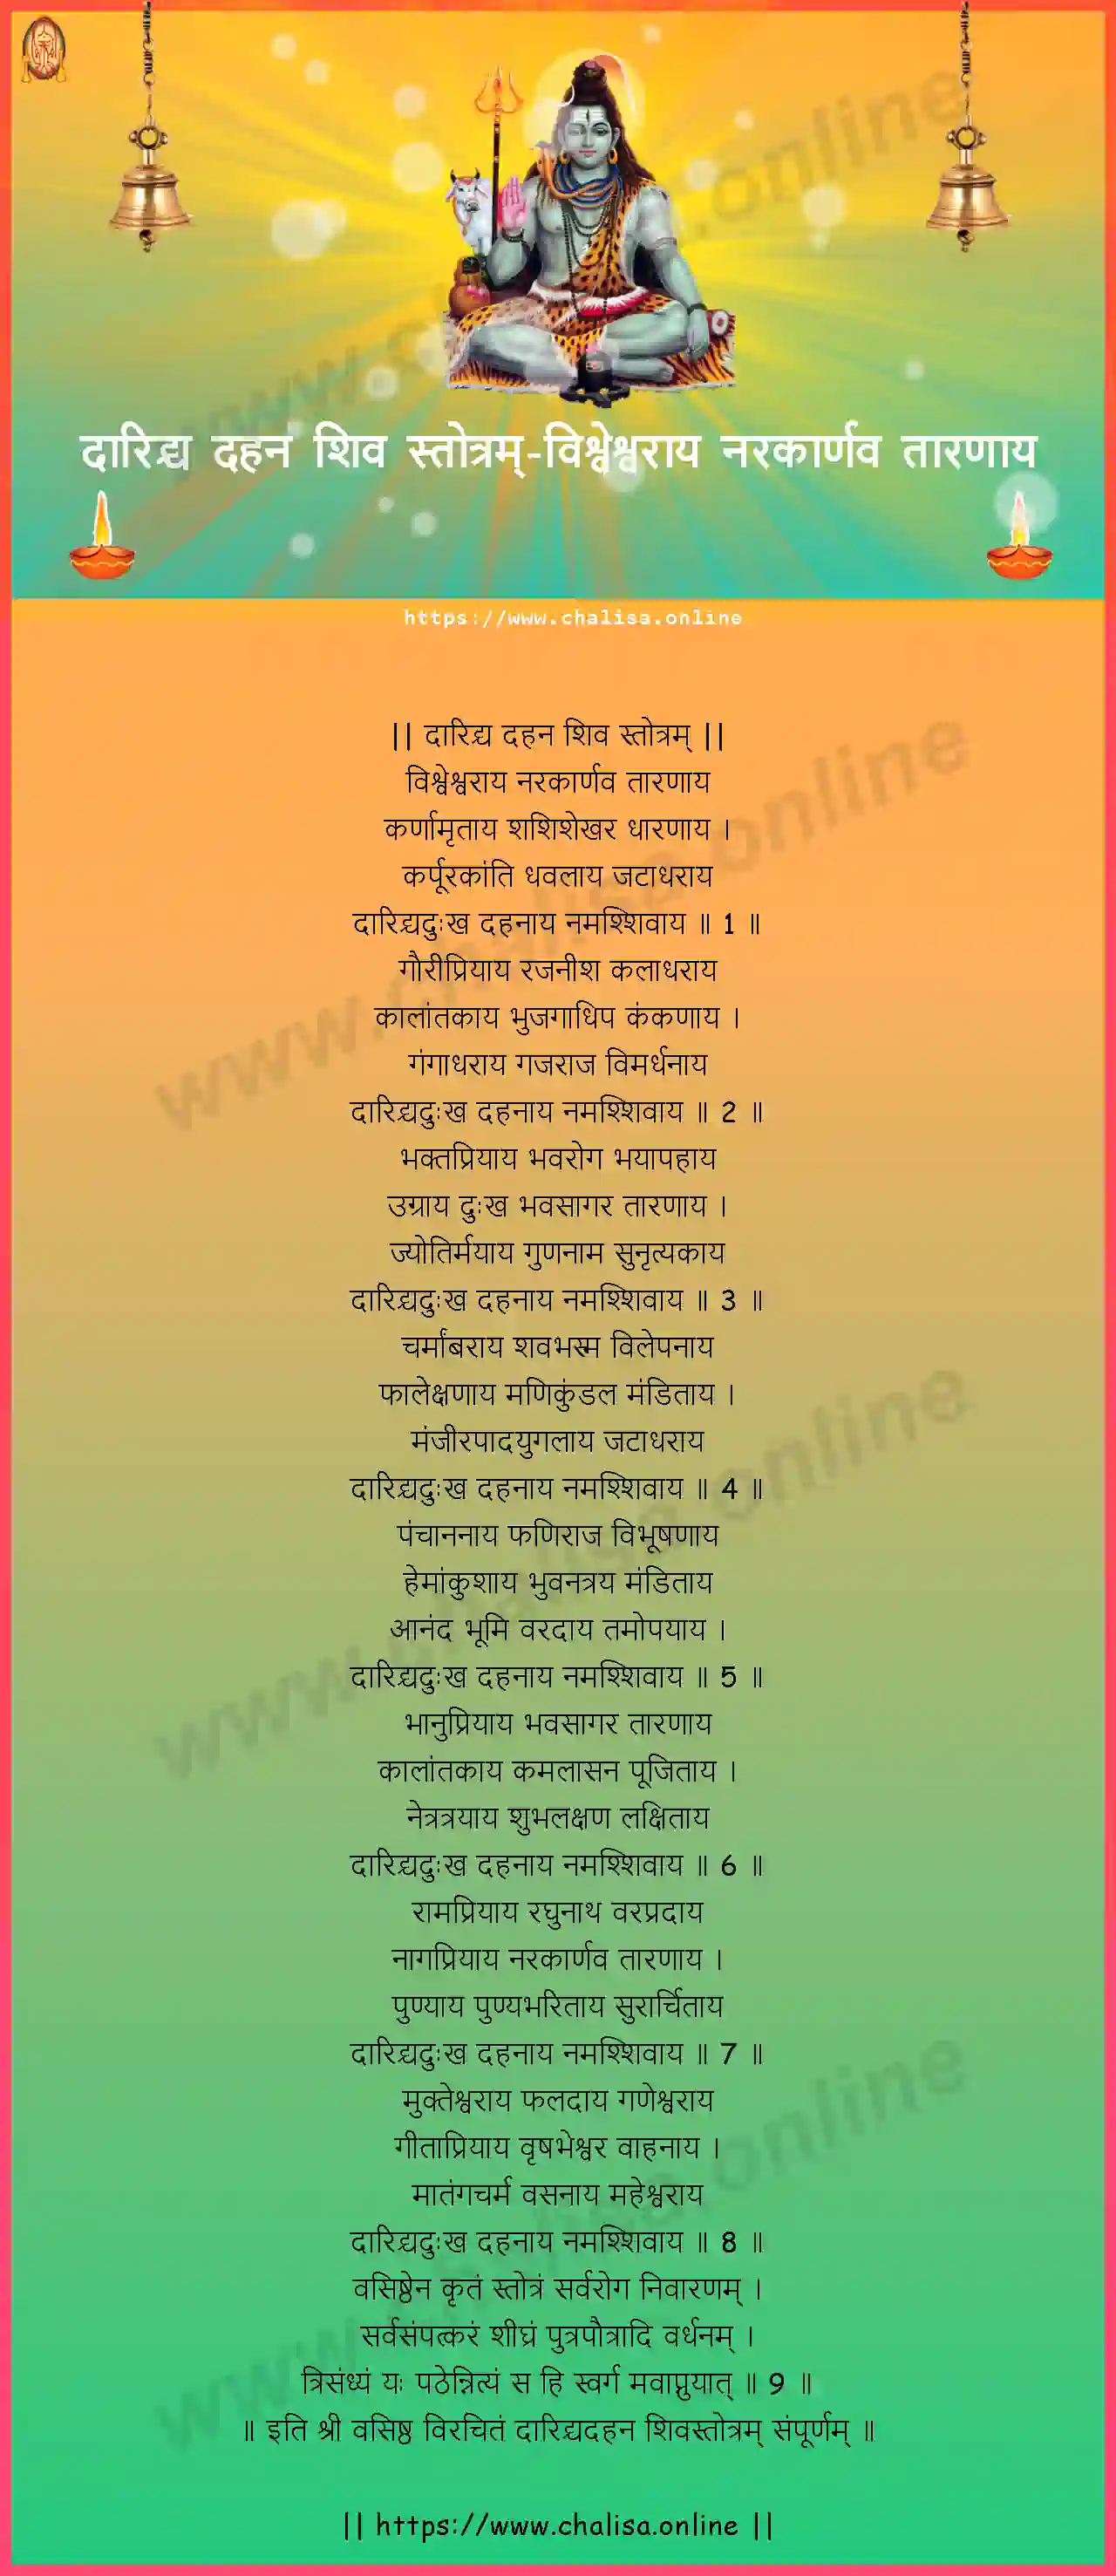 visvesvaraya-narakarnava-daridrya-dahana-shiva-stotram-hindi-hindi-lyrics-download